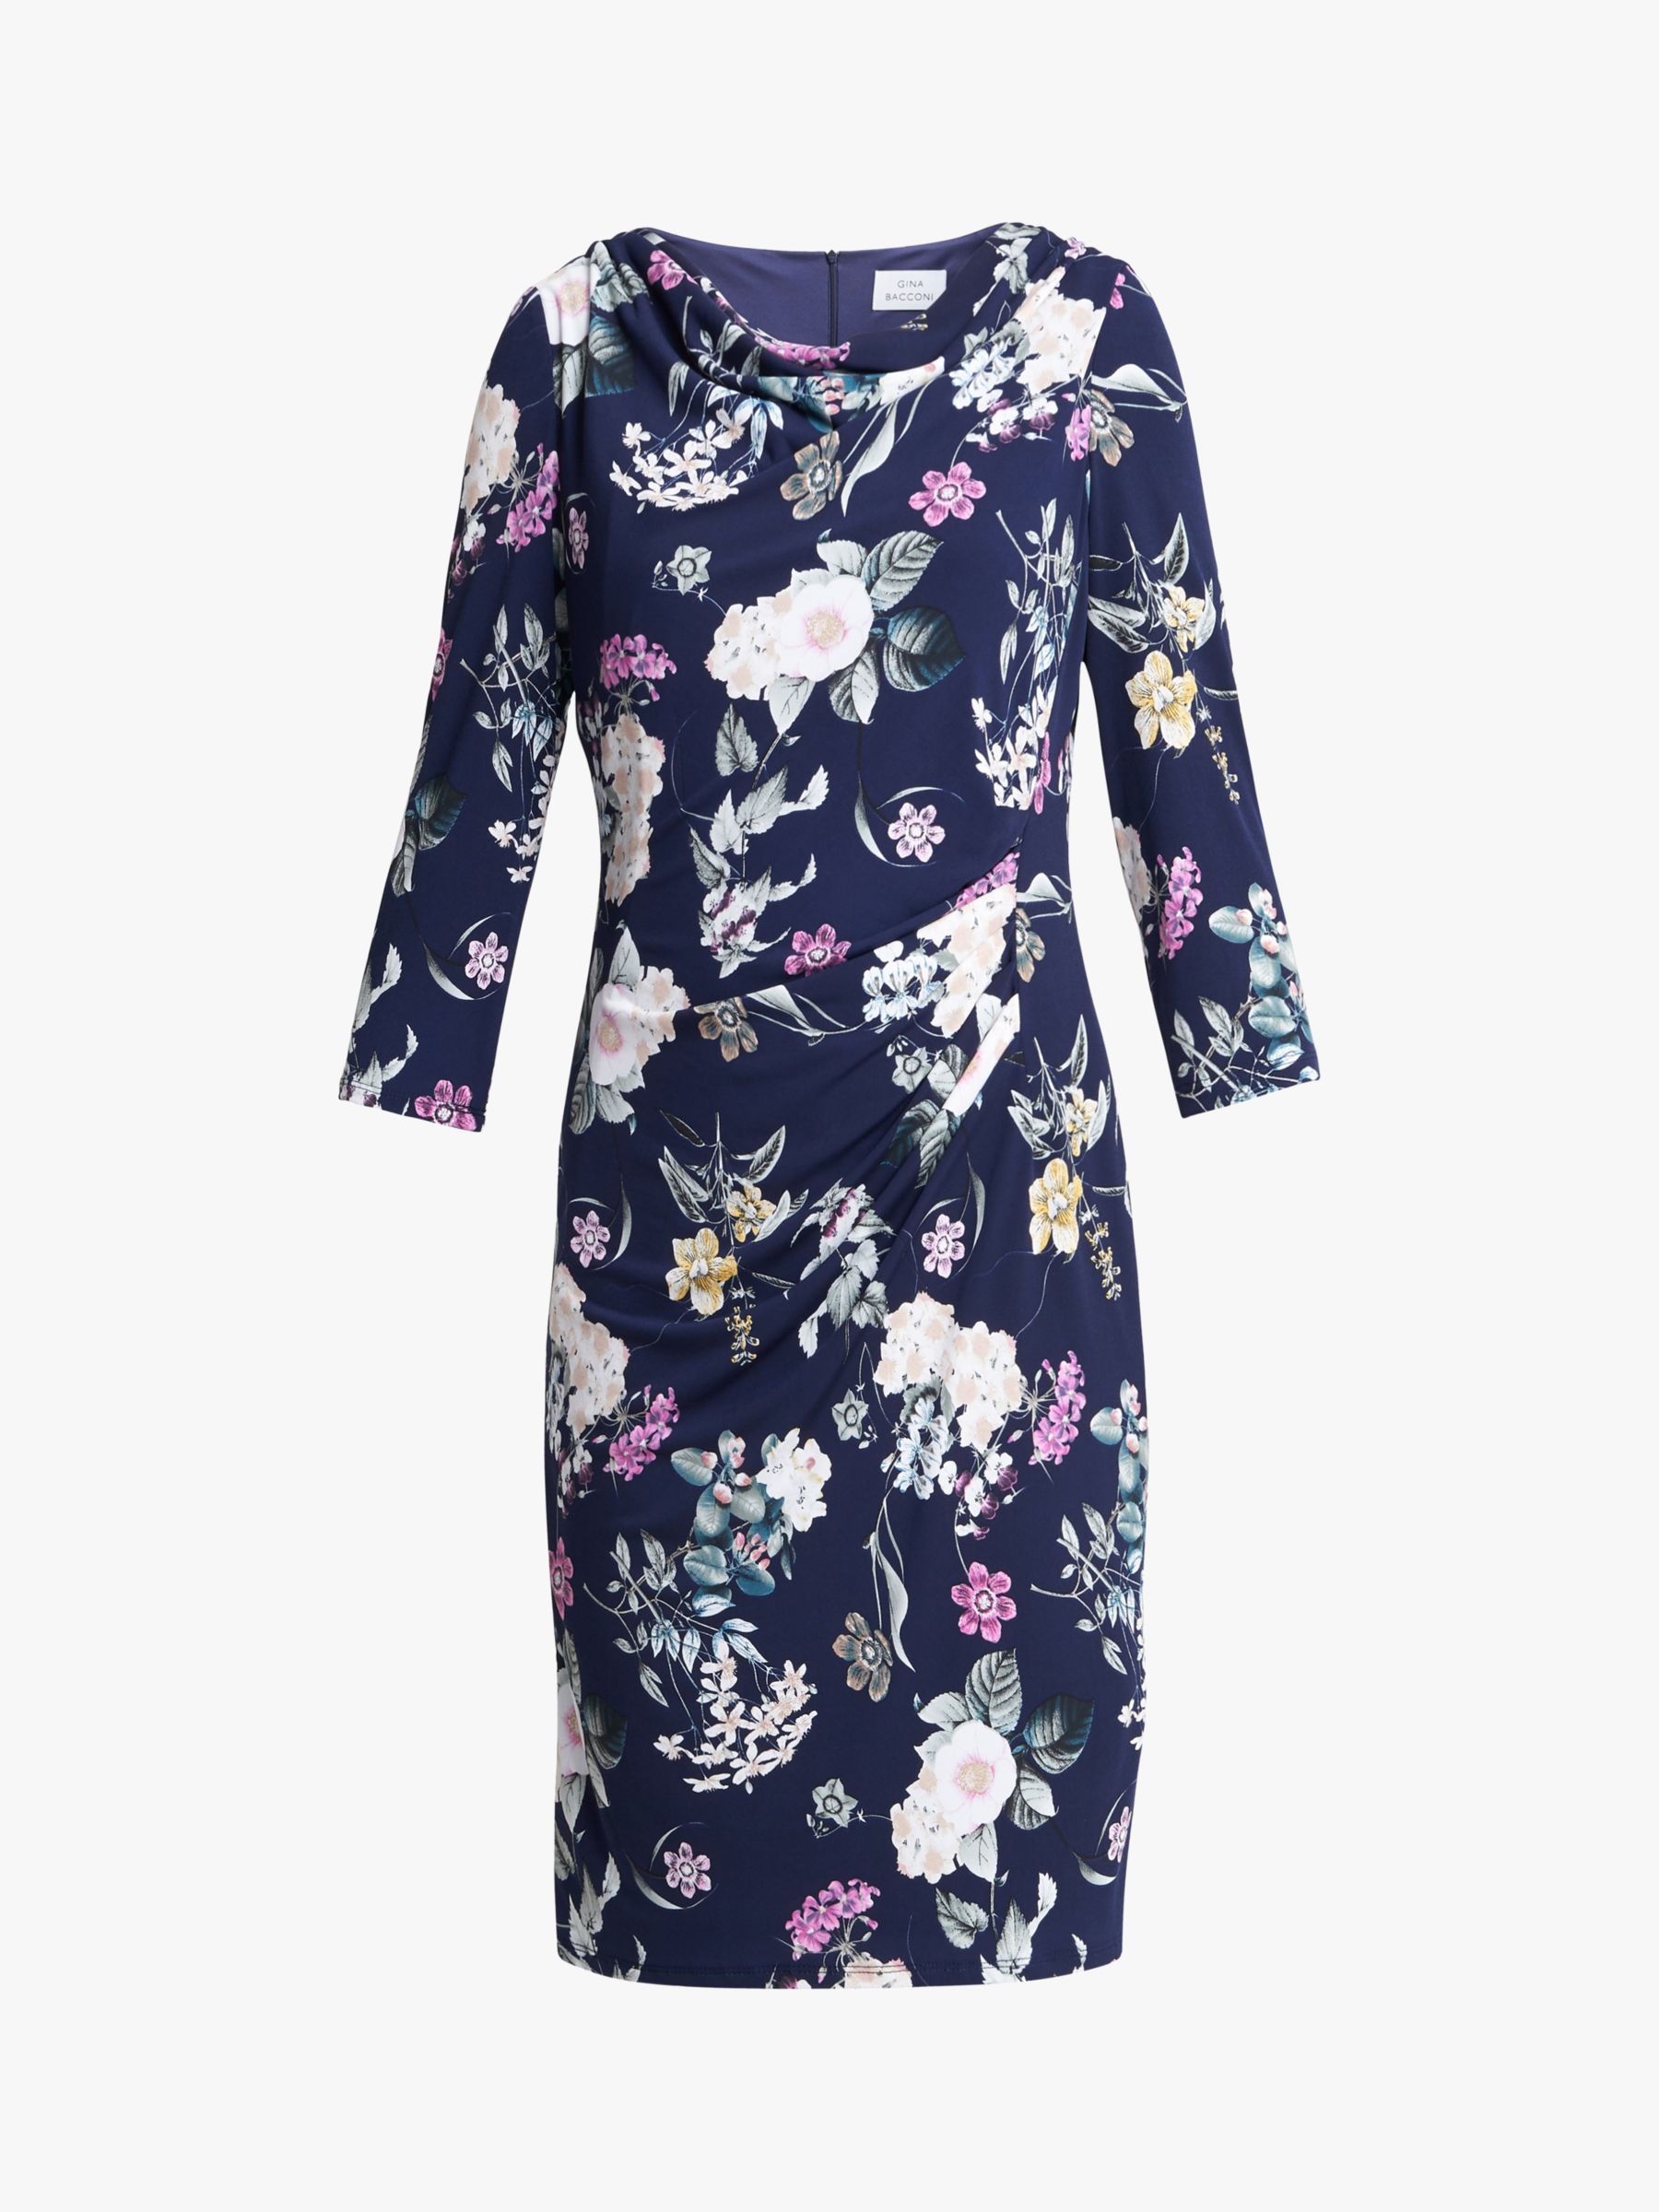 Gina Bacconi Aliya Floral Print Jersey Dress, Navy, 20